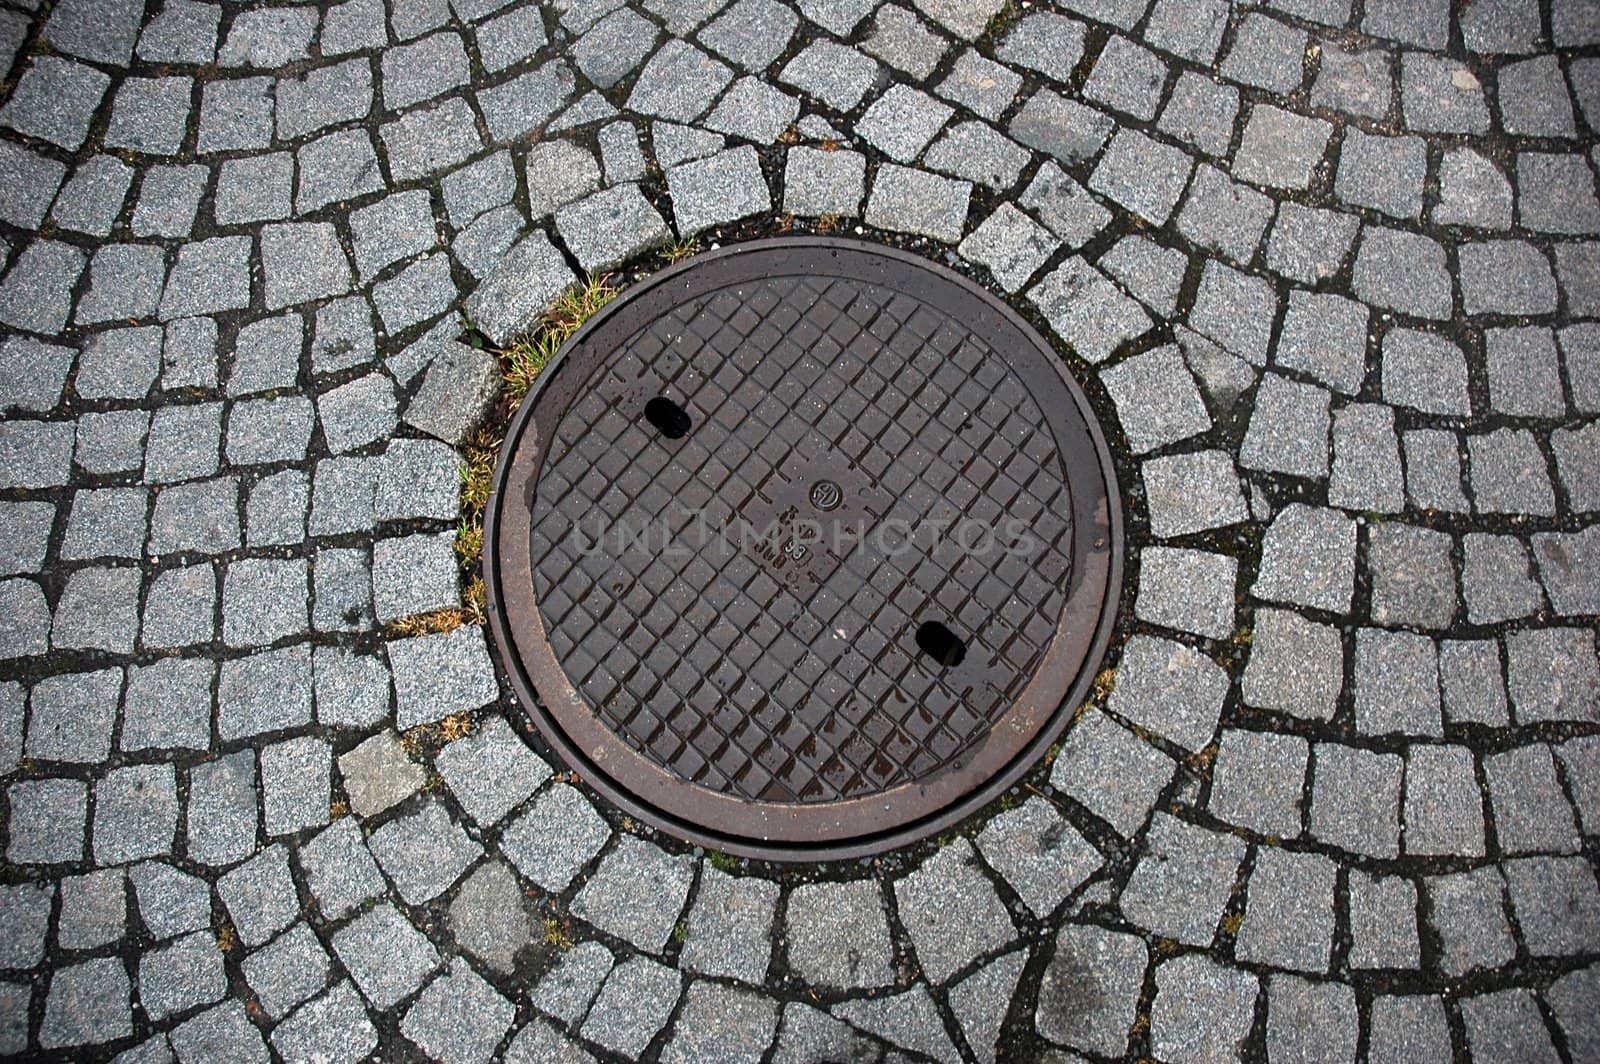 Manhole sewer cover and bricks